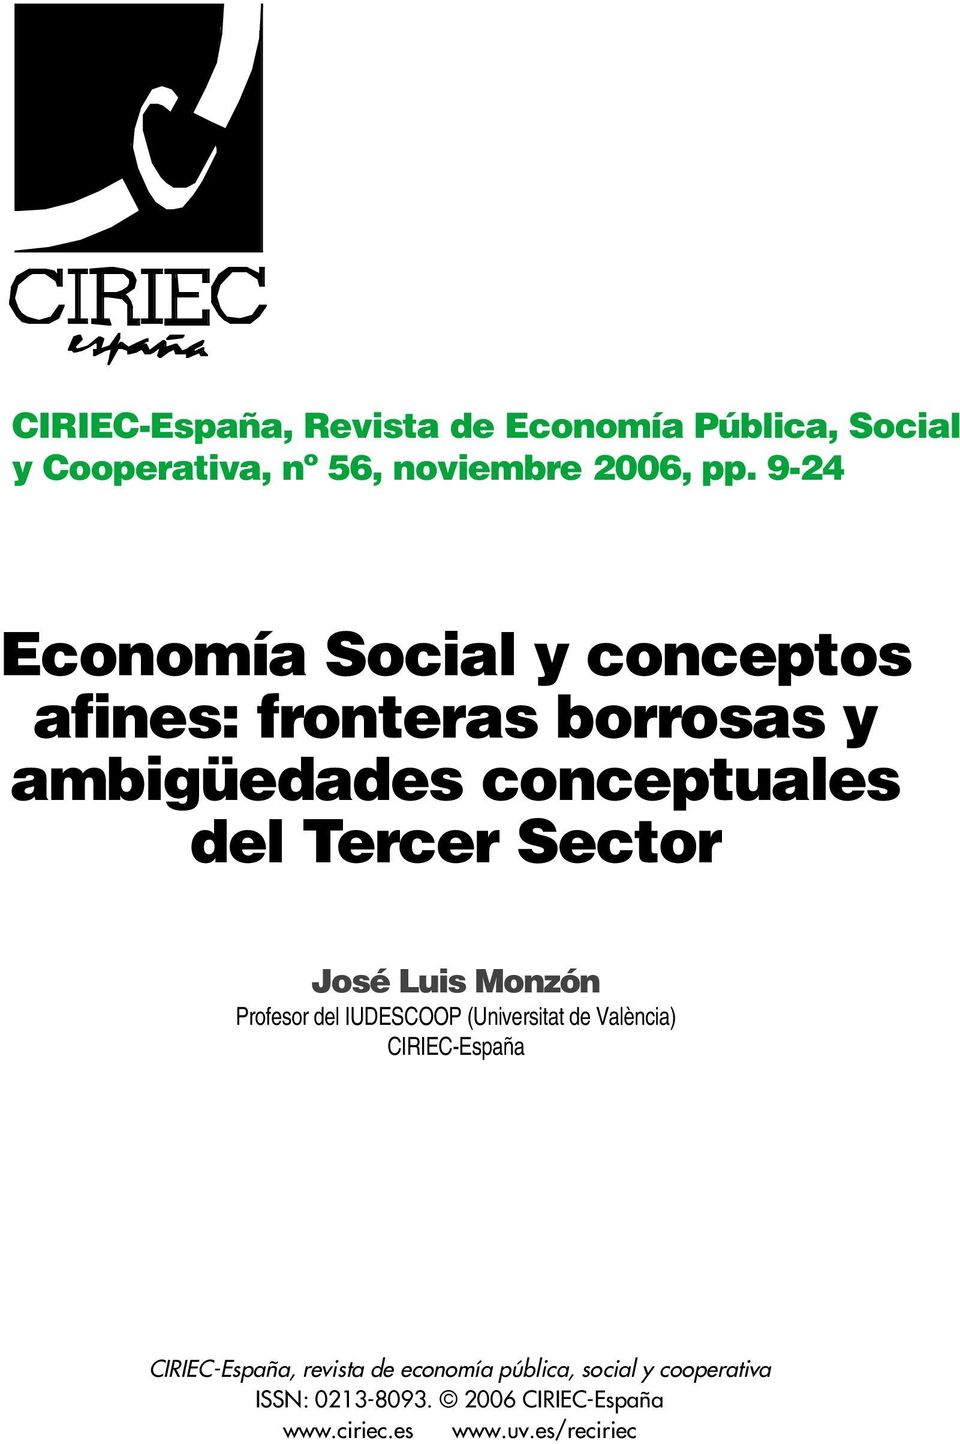 José Luis Monzón Profesor del IUDESCOOP (Universitat de València) C I R I E C - E s p a ñ a CIRIEC-España,